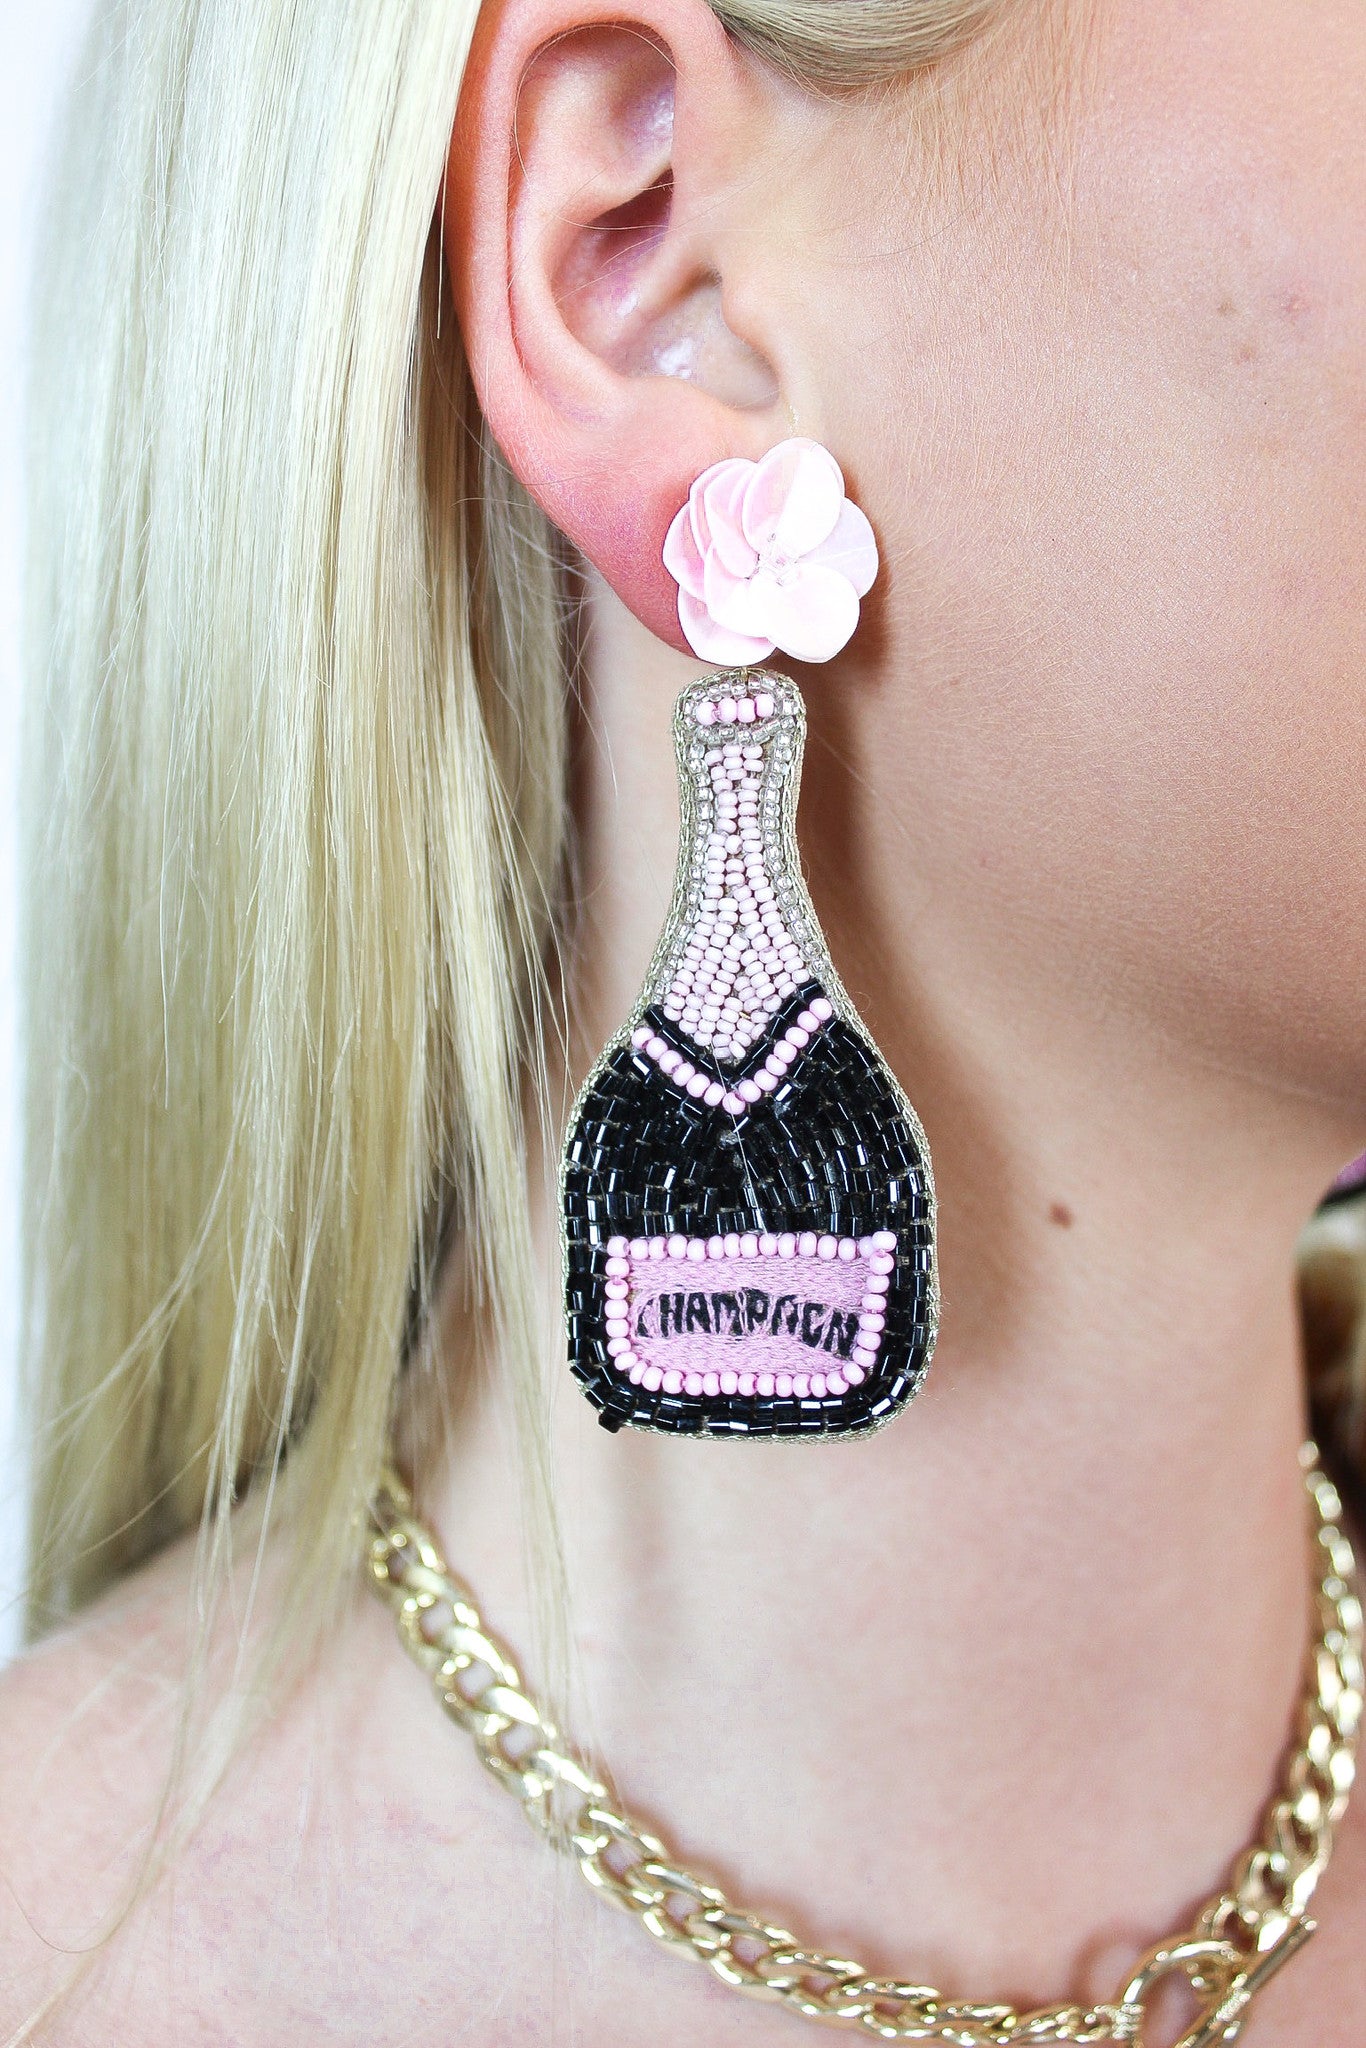 Poppin' Pink Champagne Earrings